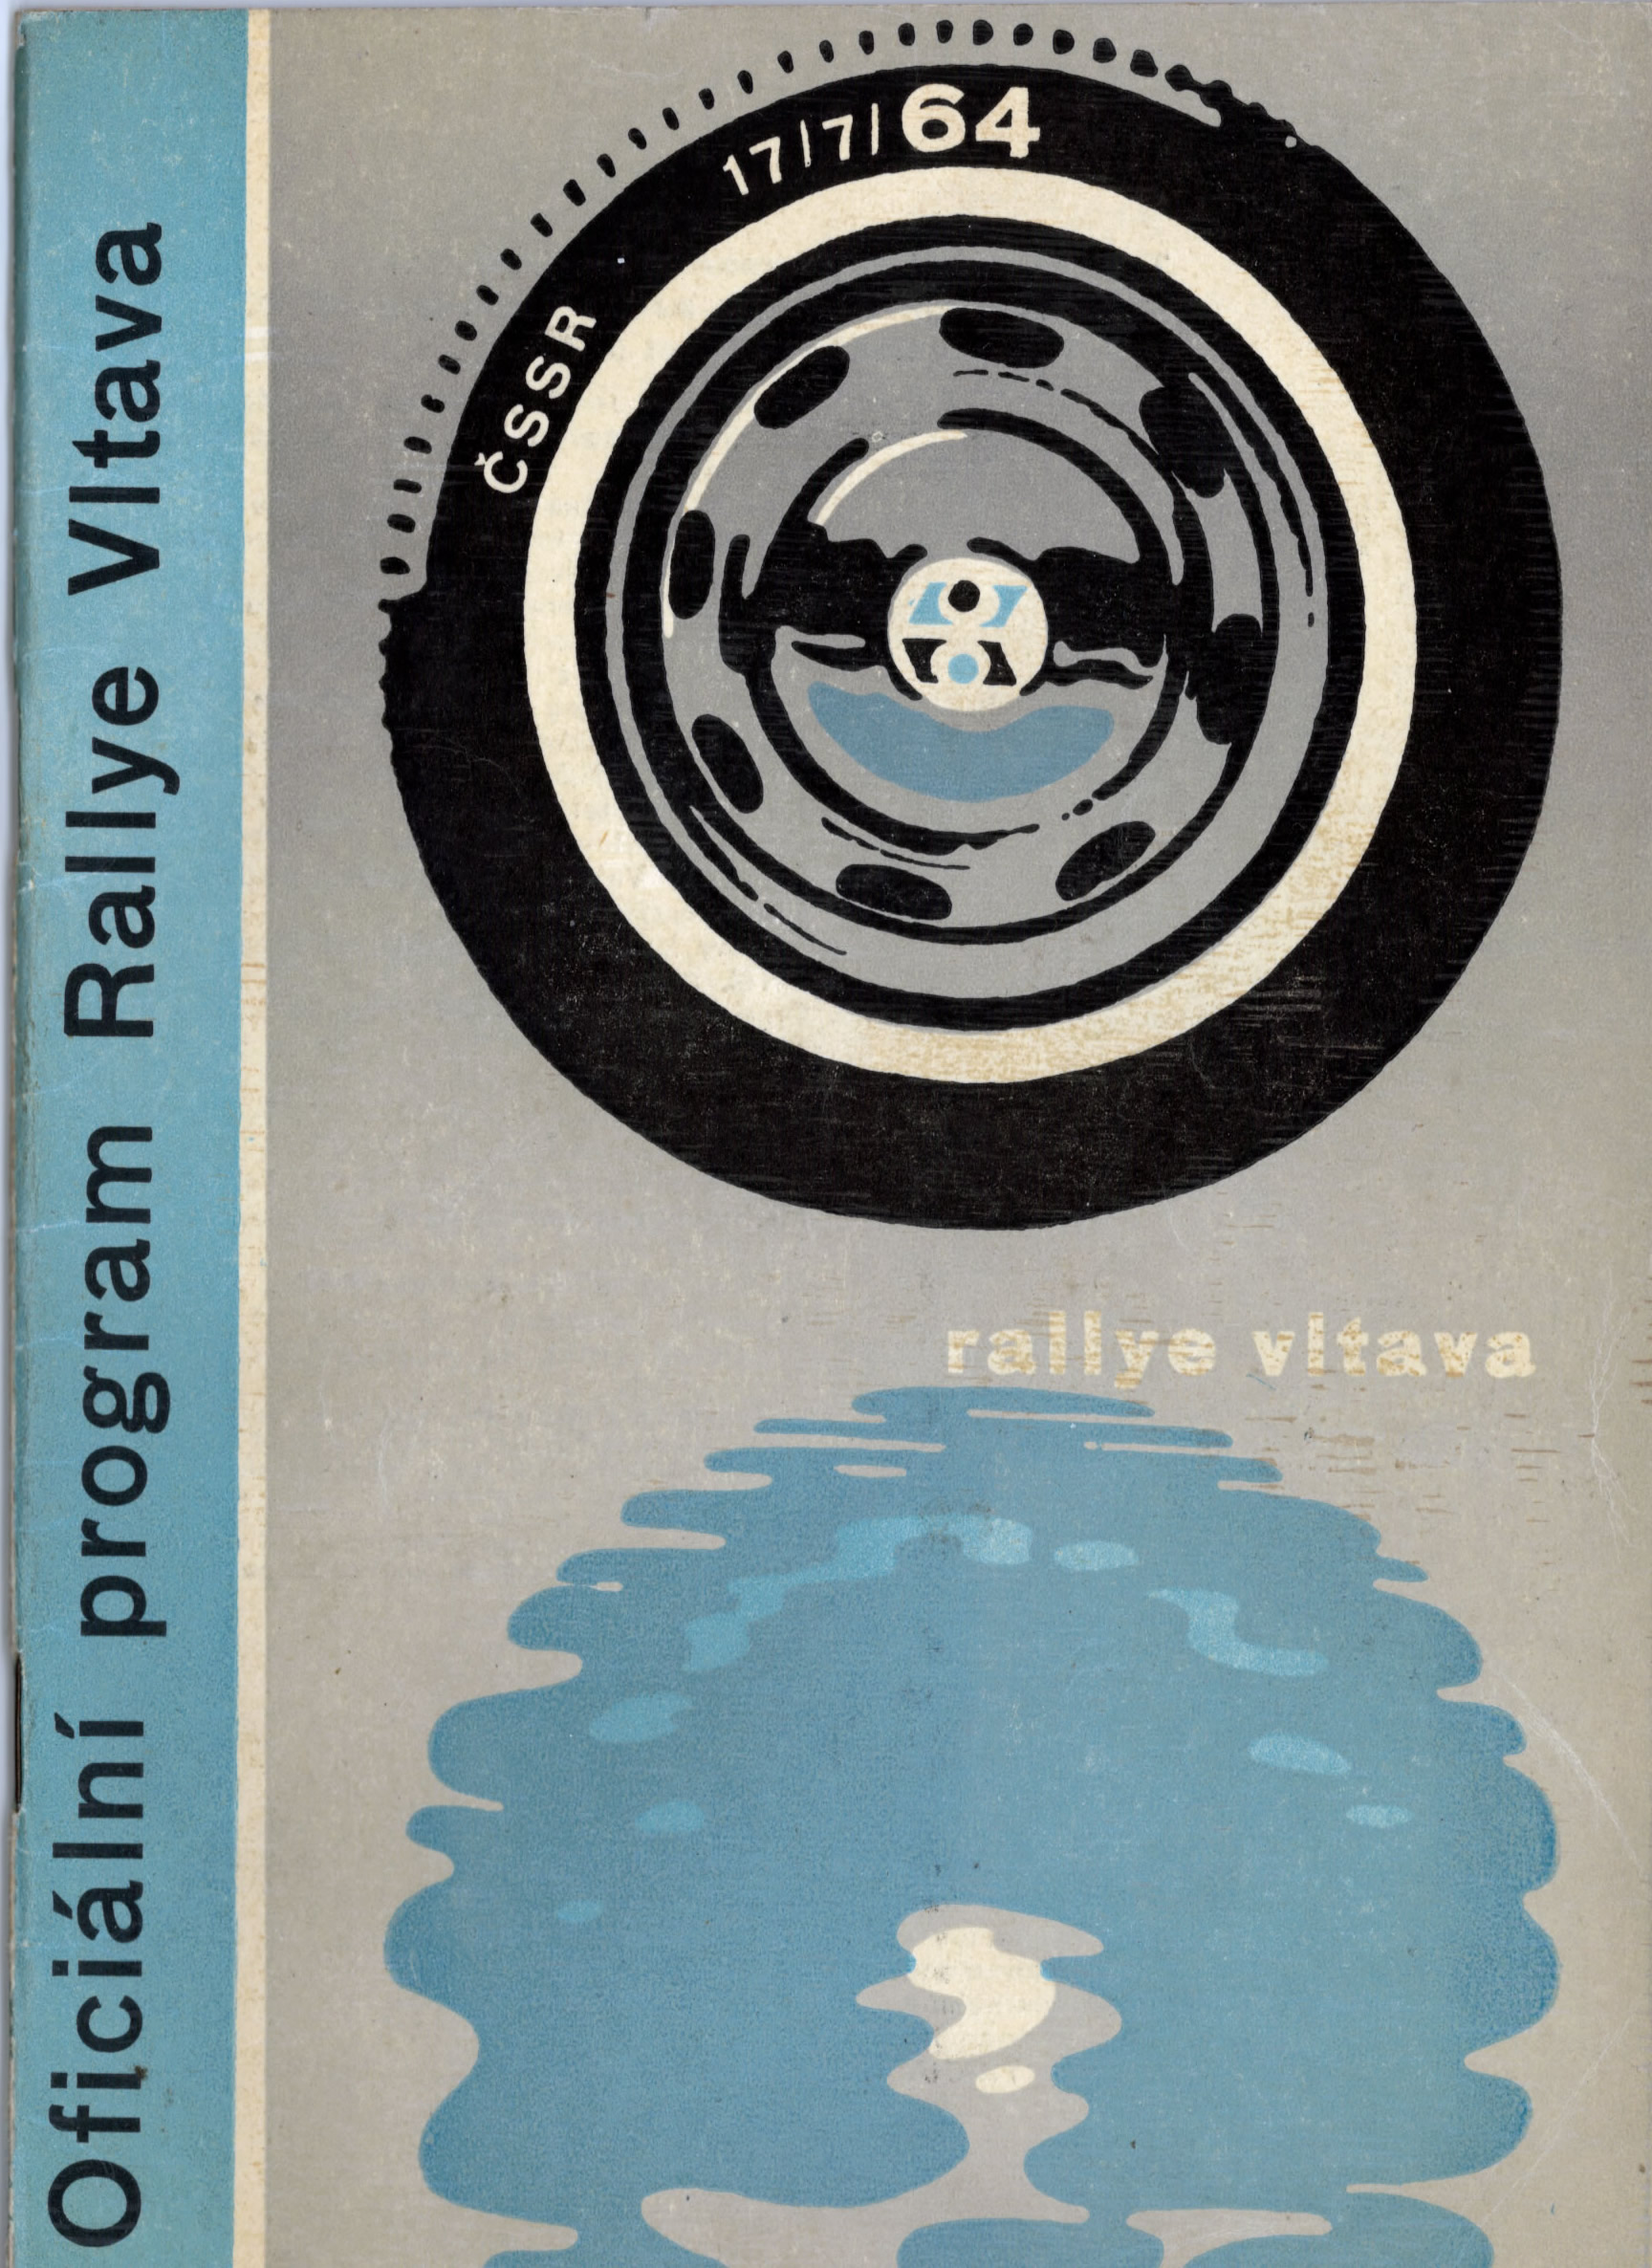 Rallye Vltava 1964